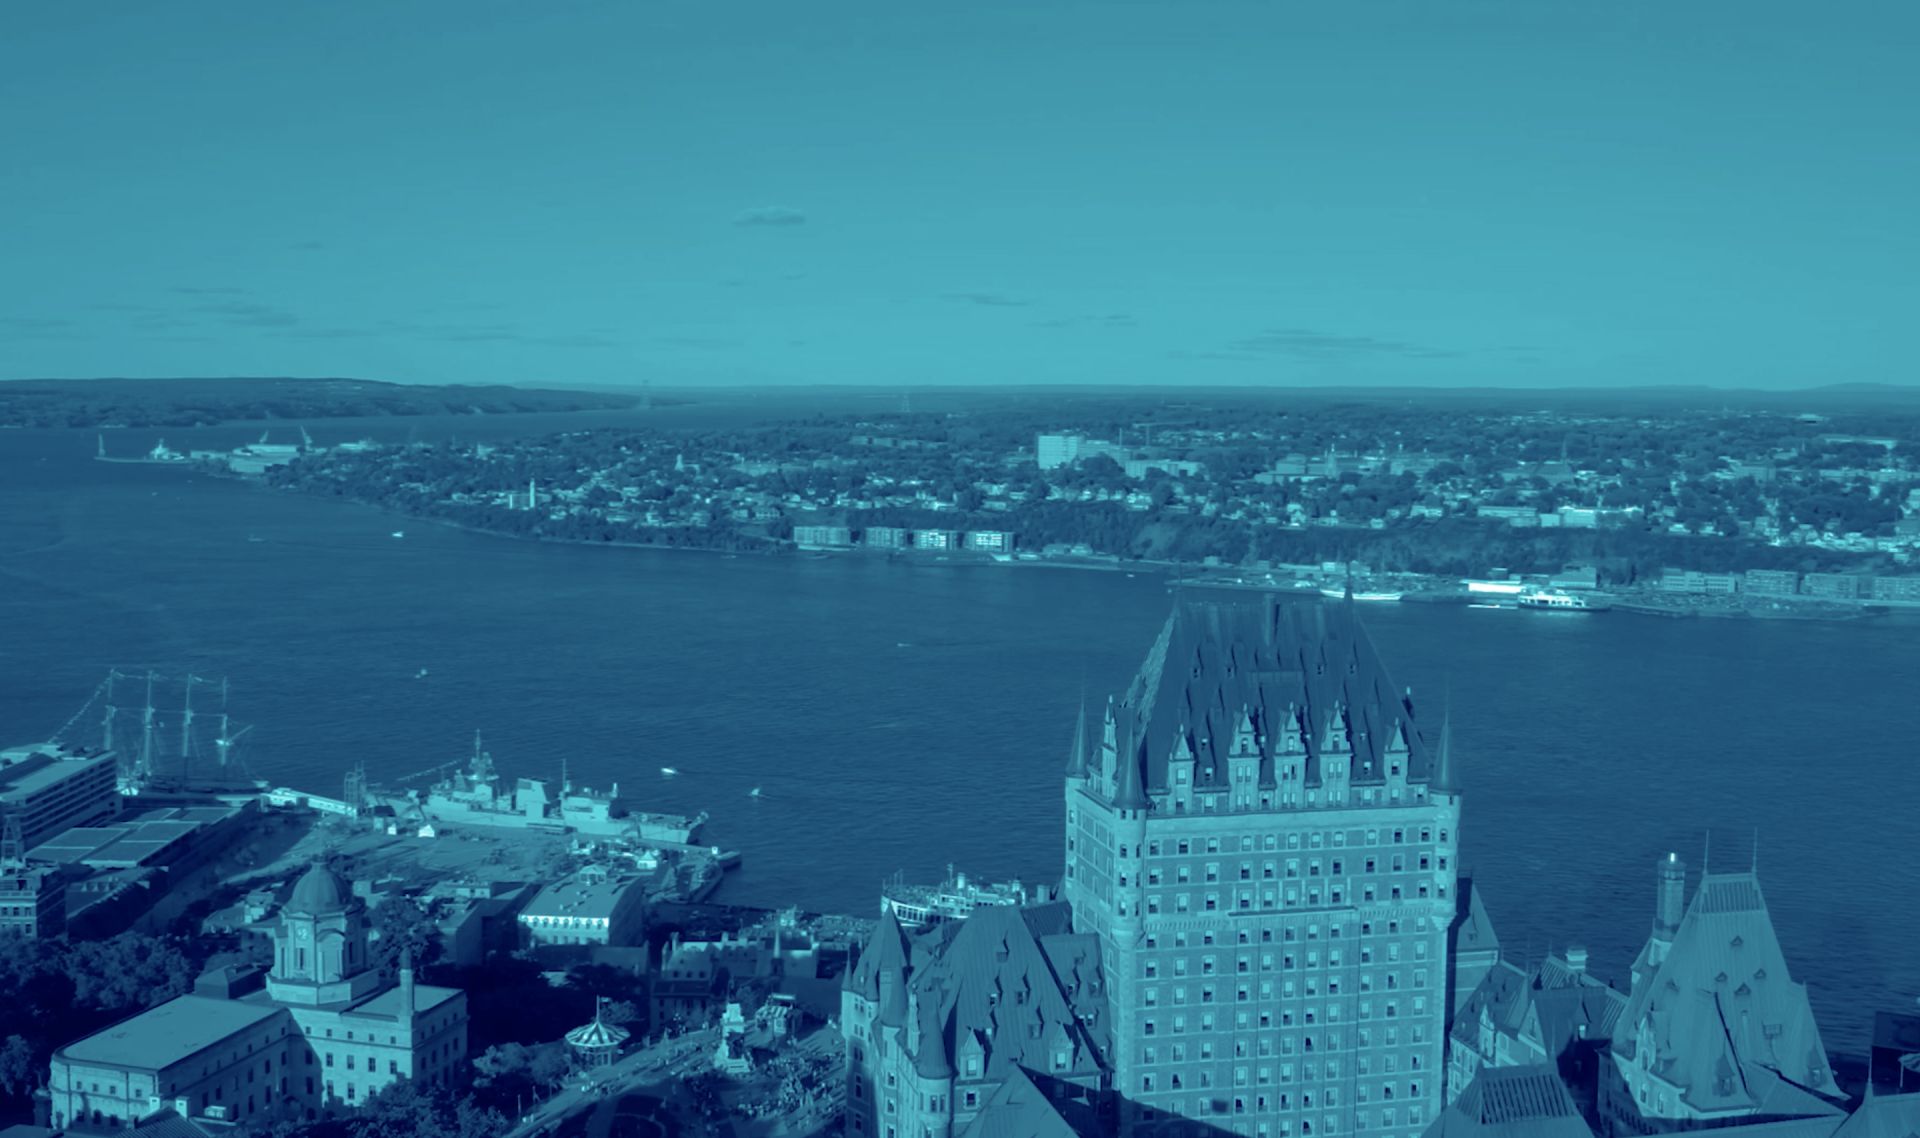 Port of Québec